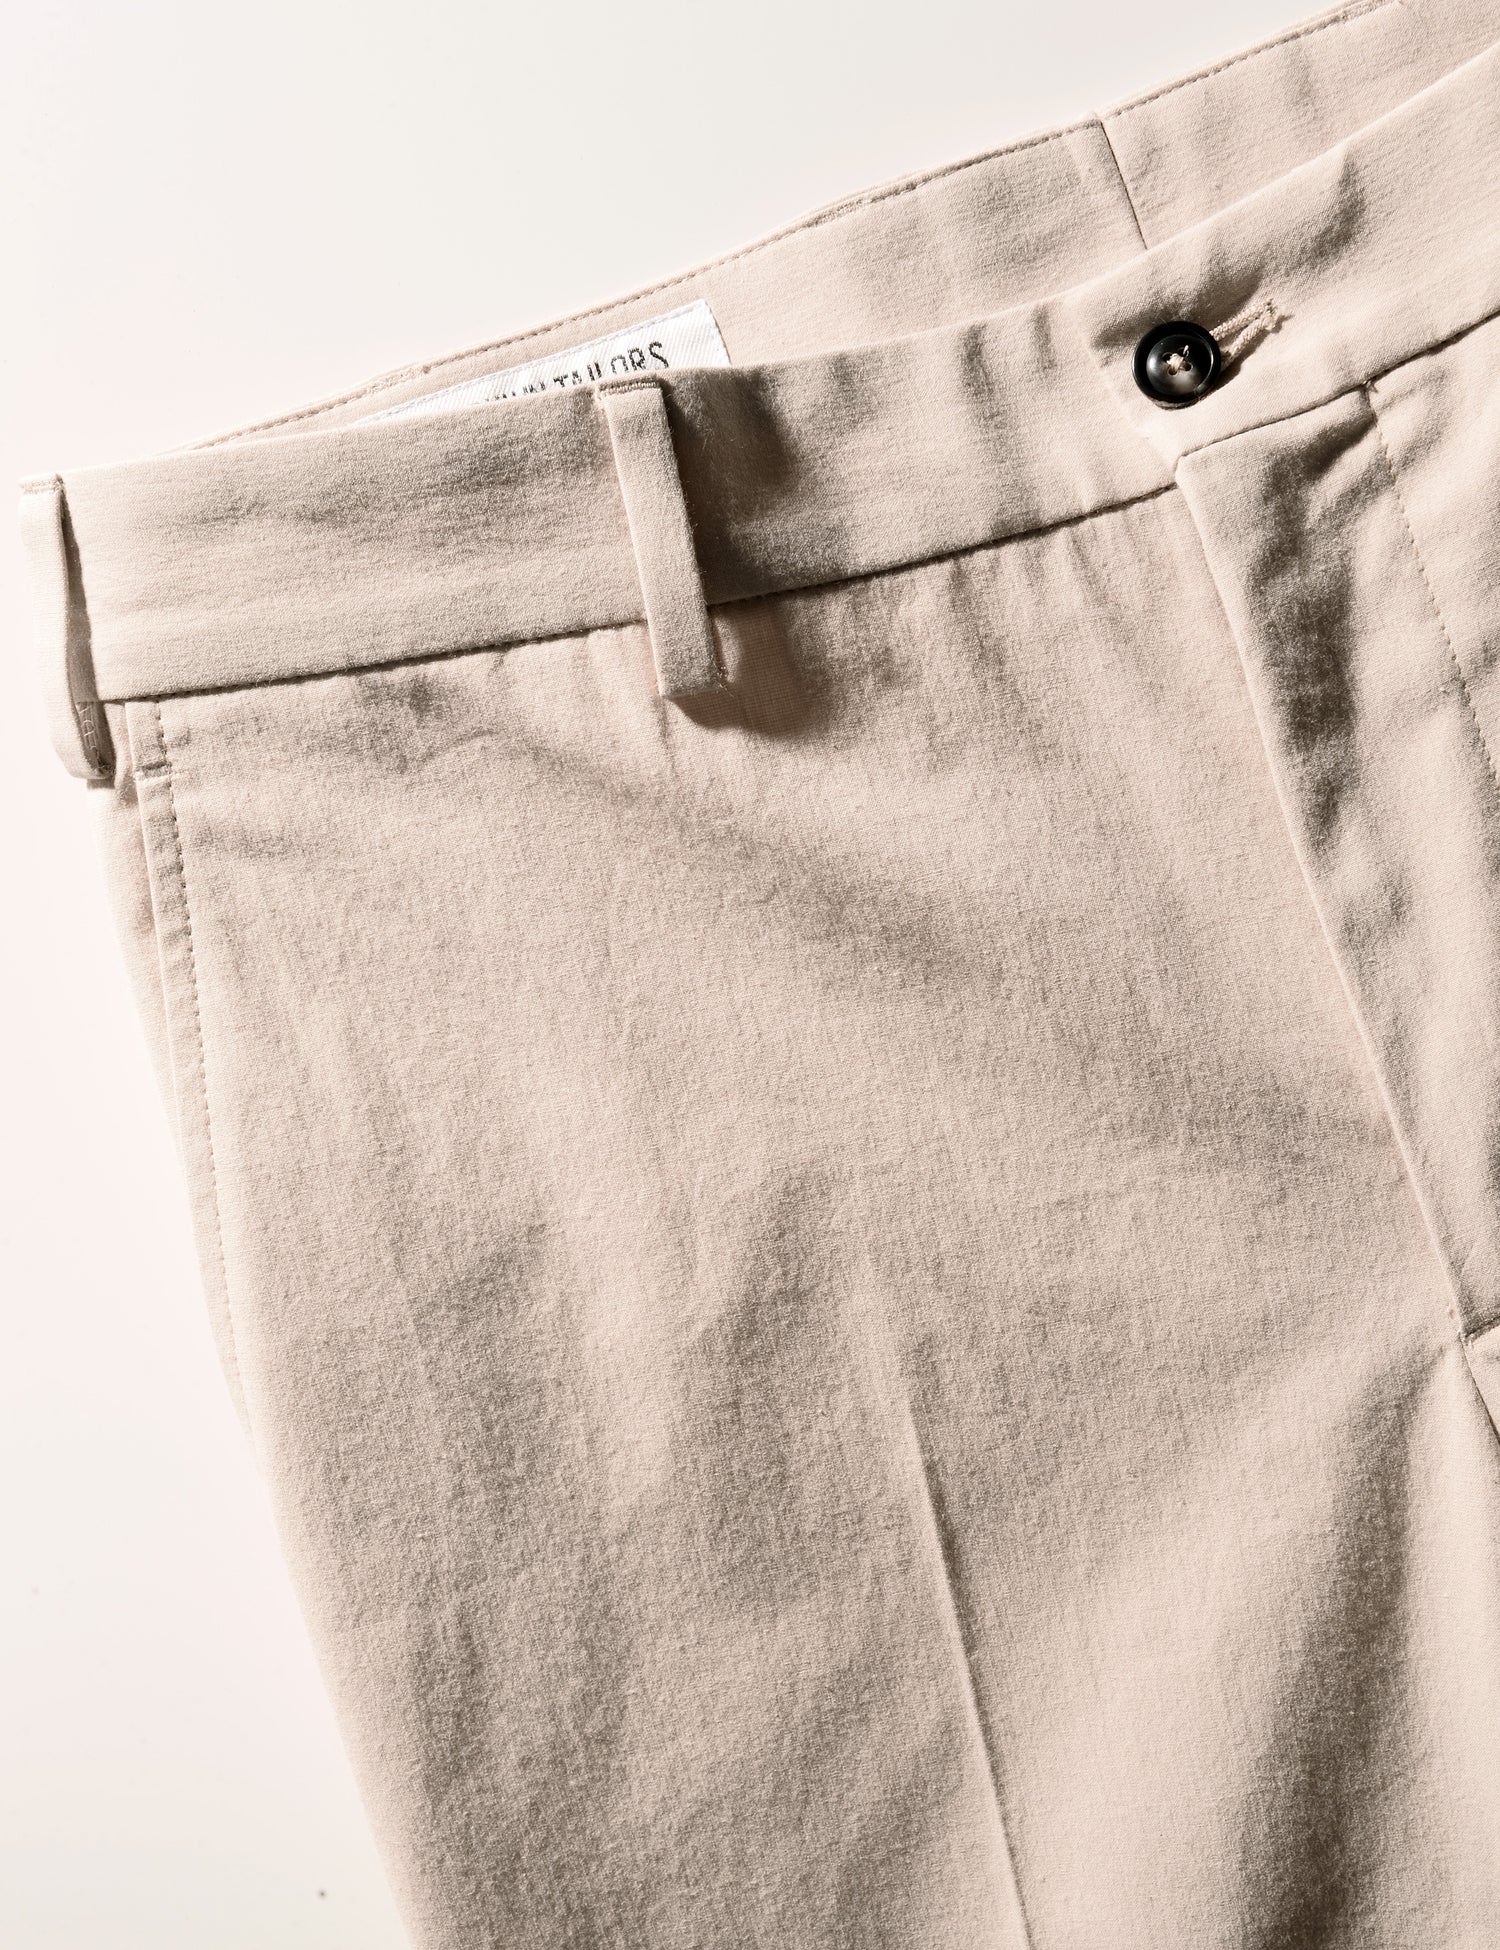 Detail shot of waistband and pocket of Brooklyn Tailors BKT36 Straight Leg Pant in Crisp Cotton Blend - Desert Sand